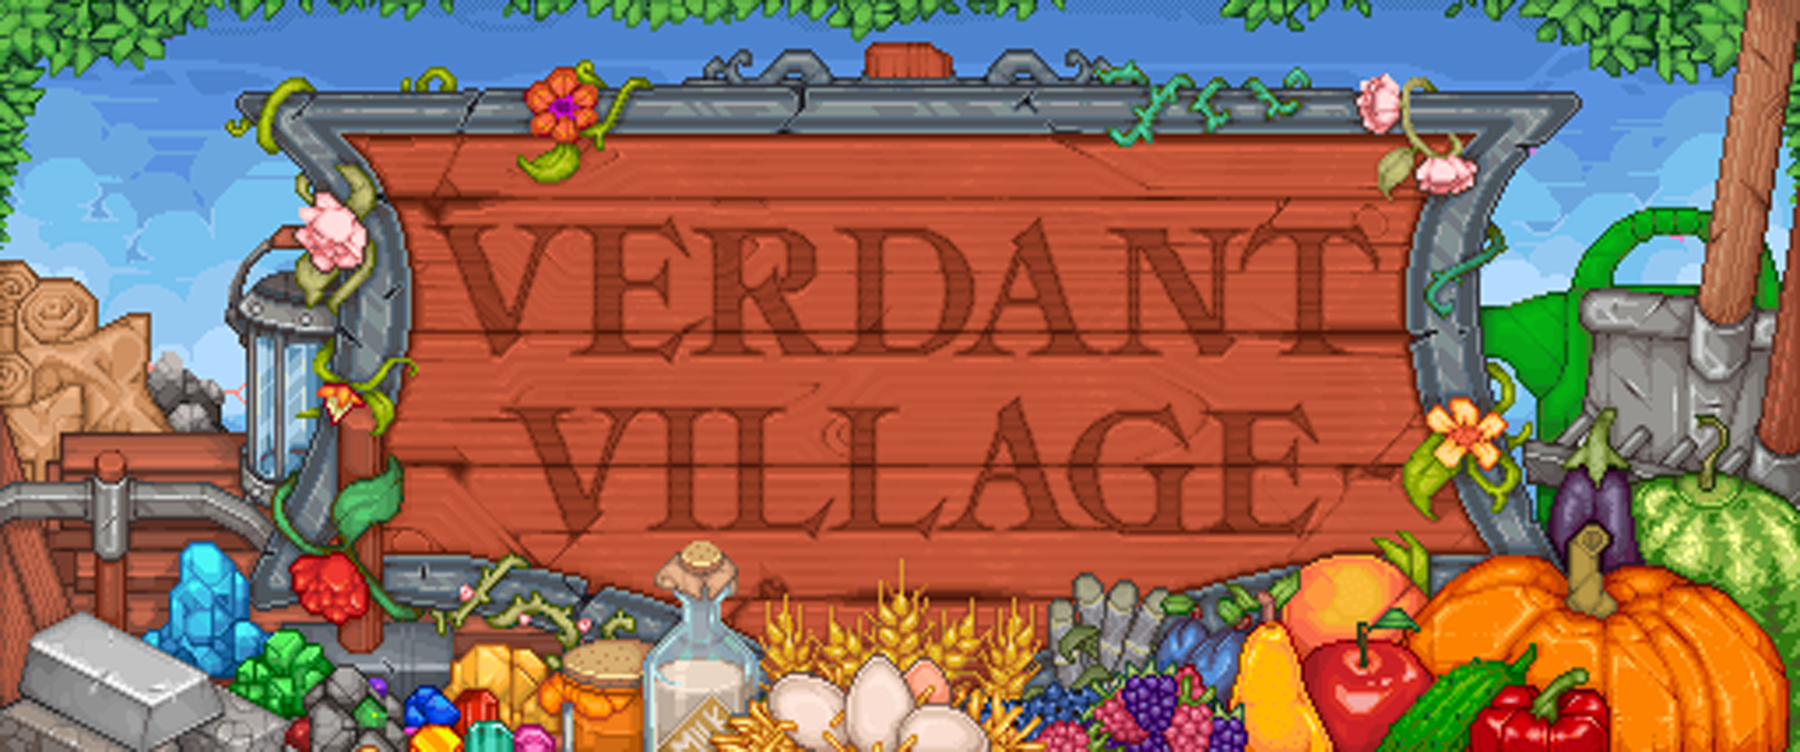   Verdant Village